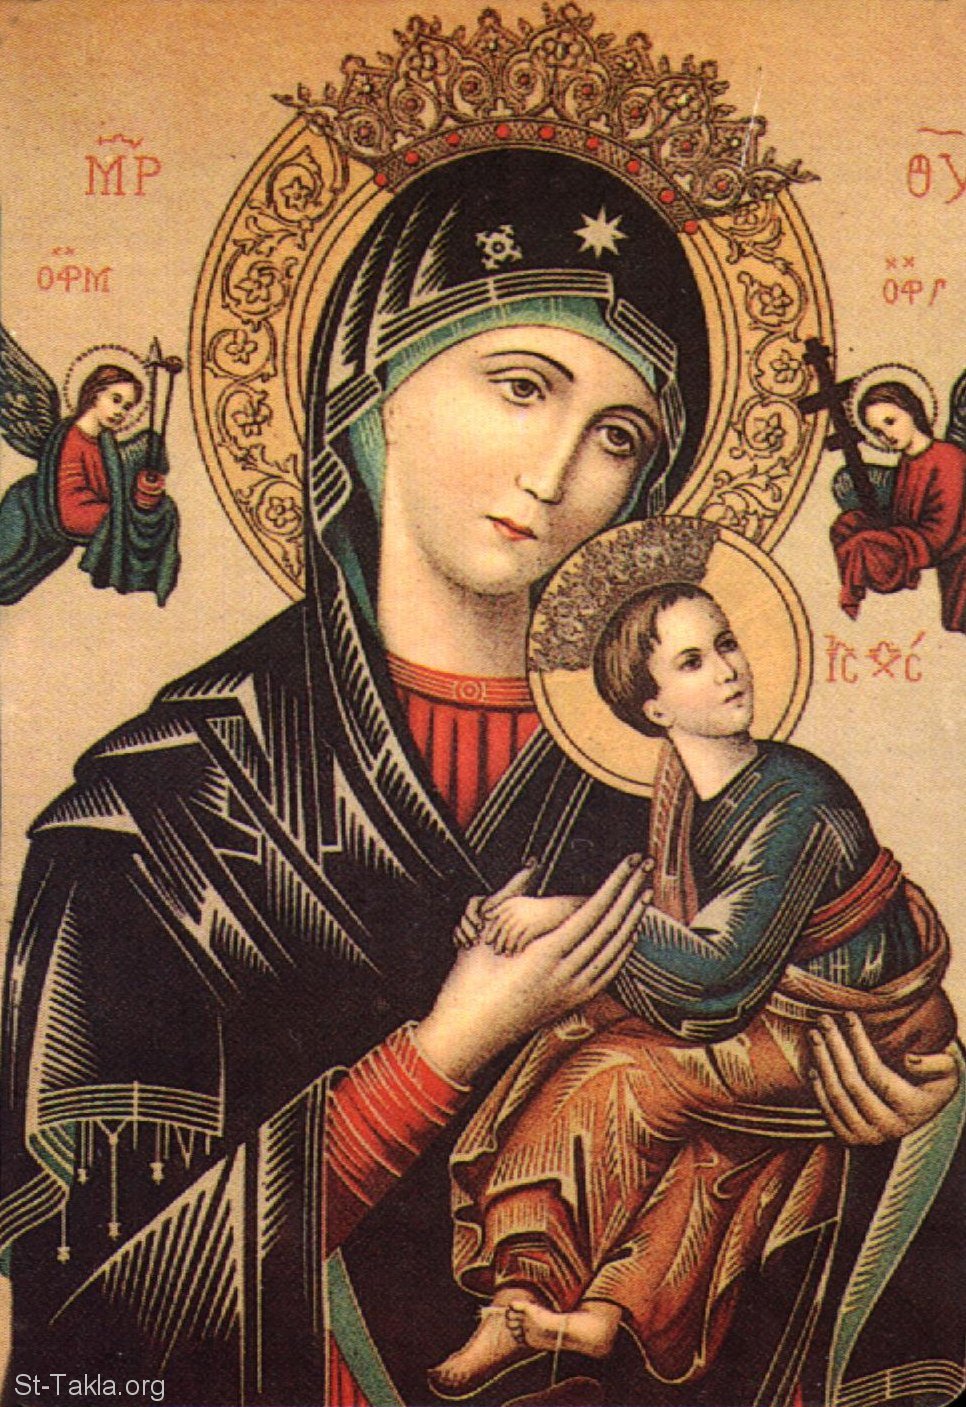 Doa bersama Bunda Maria - DOA YANG INDAH SANTO ALFONSUS MARIA de